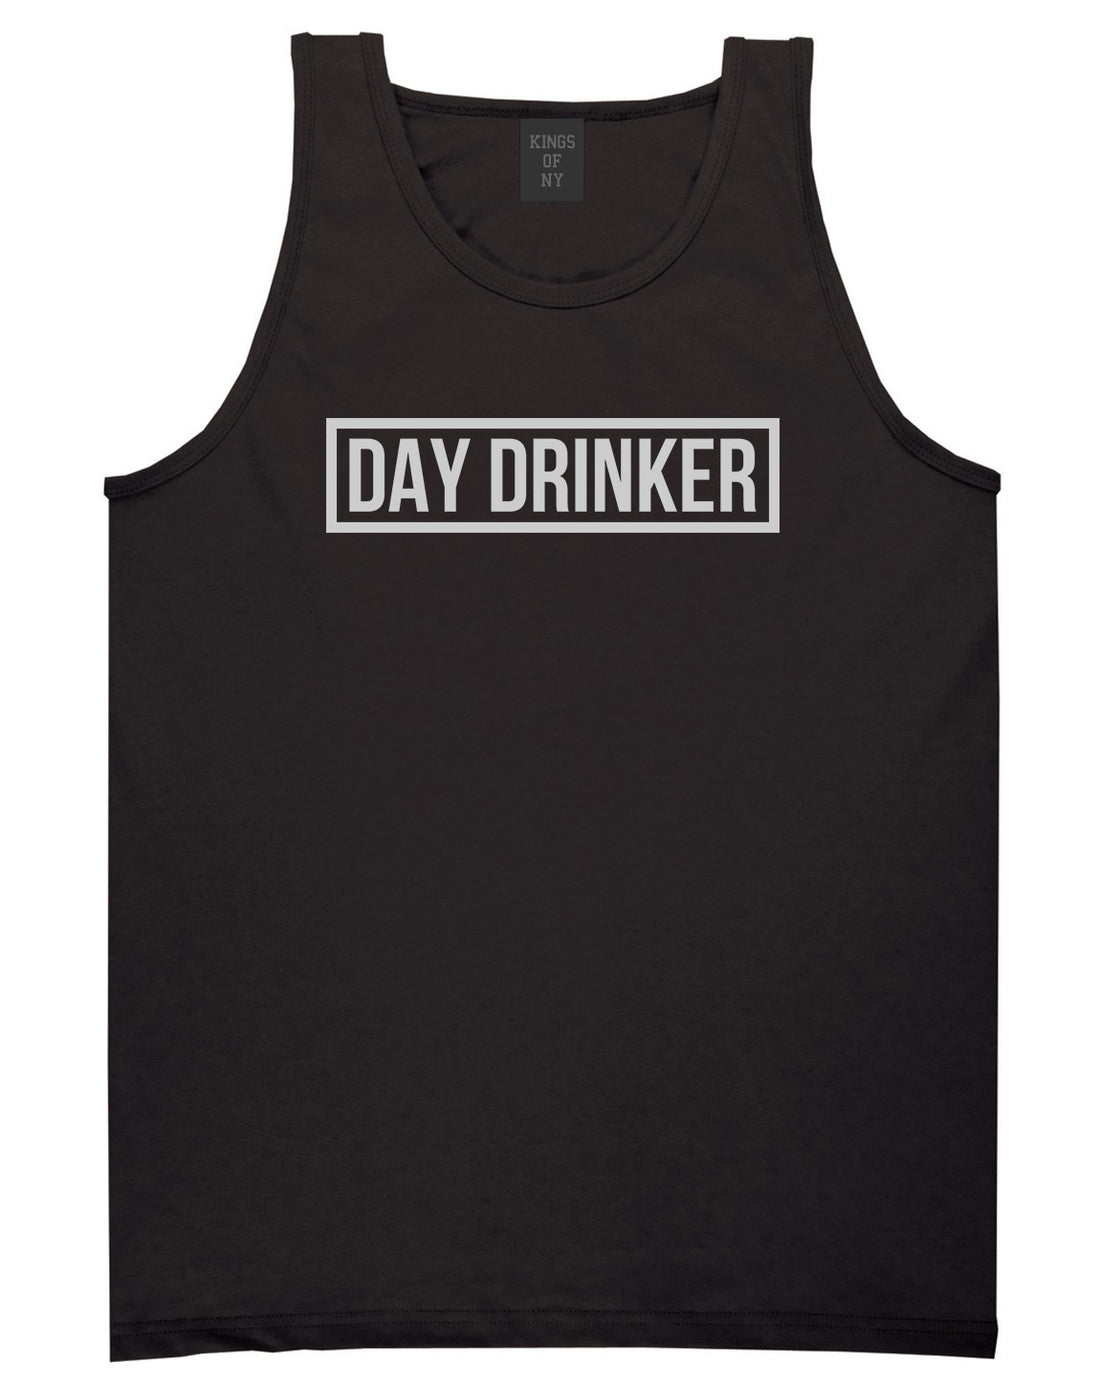 Day_Drinker_Box_Logo Mens Black Tank Top Shirt by Kings Of NY